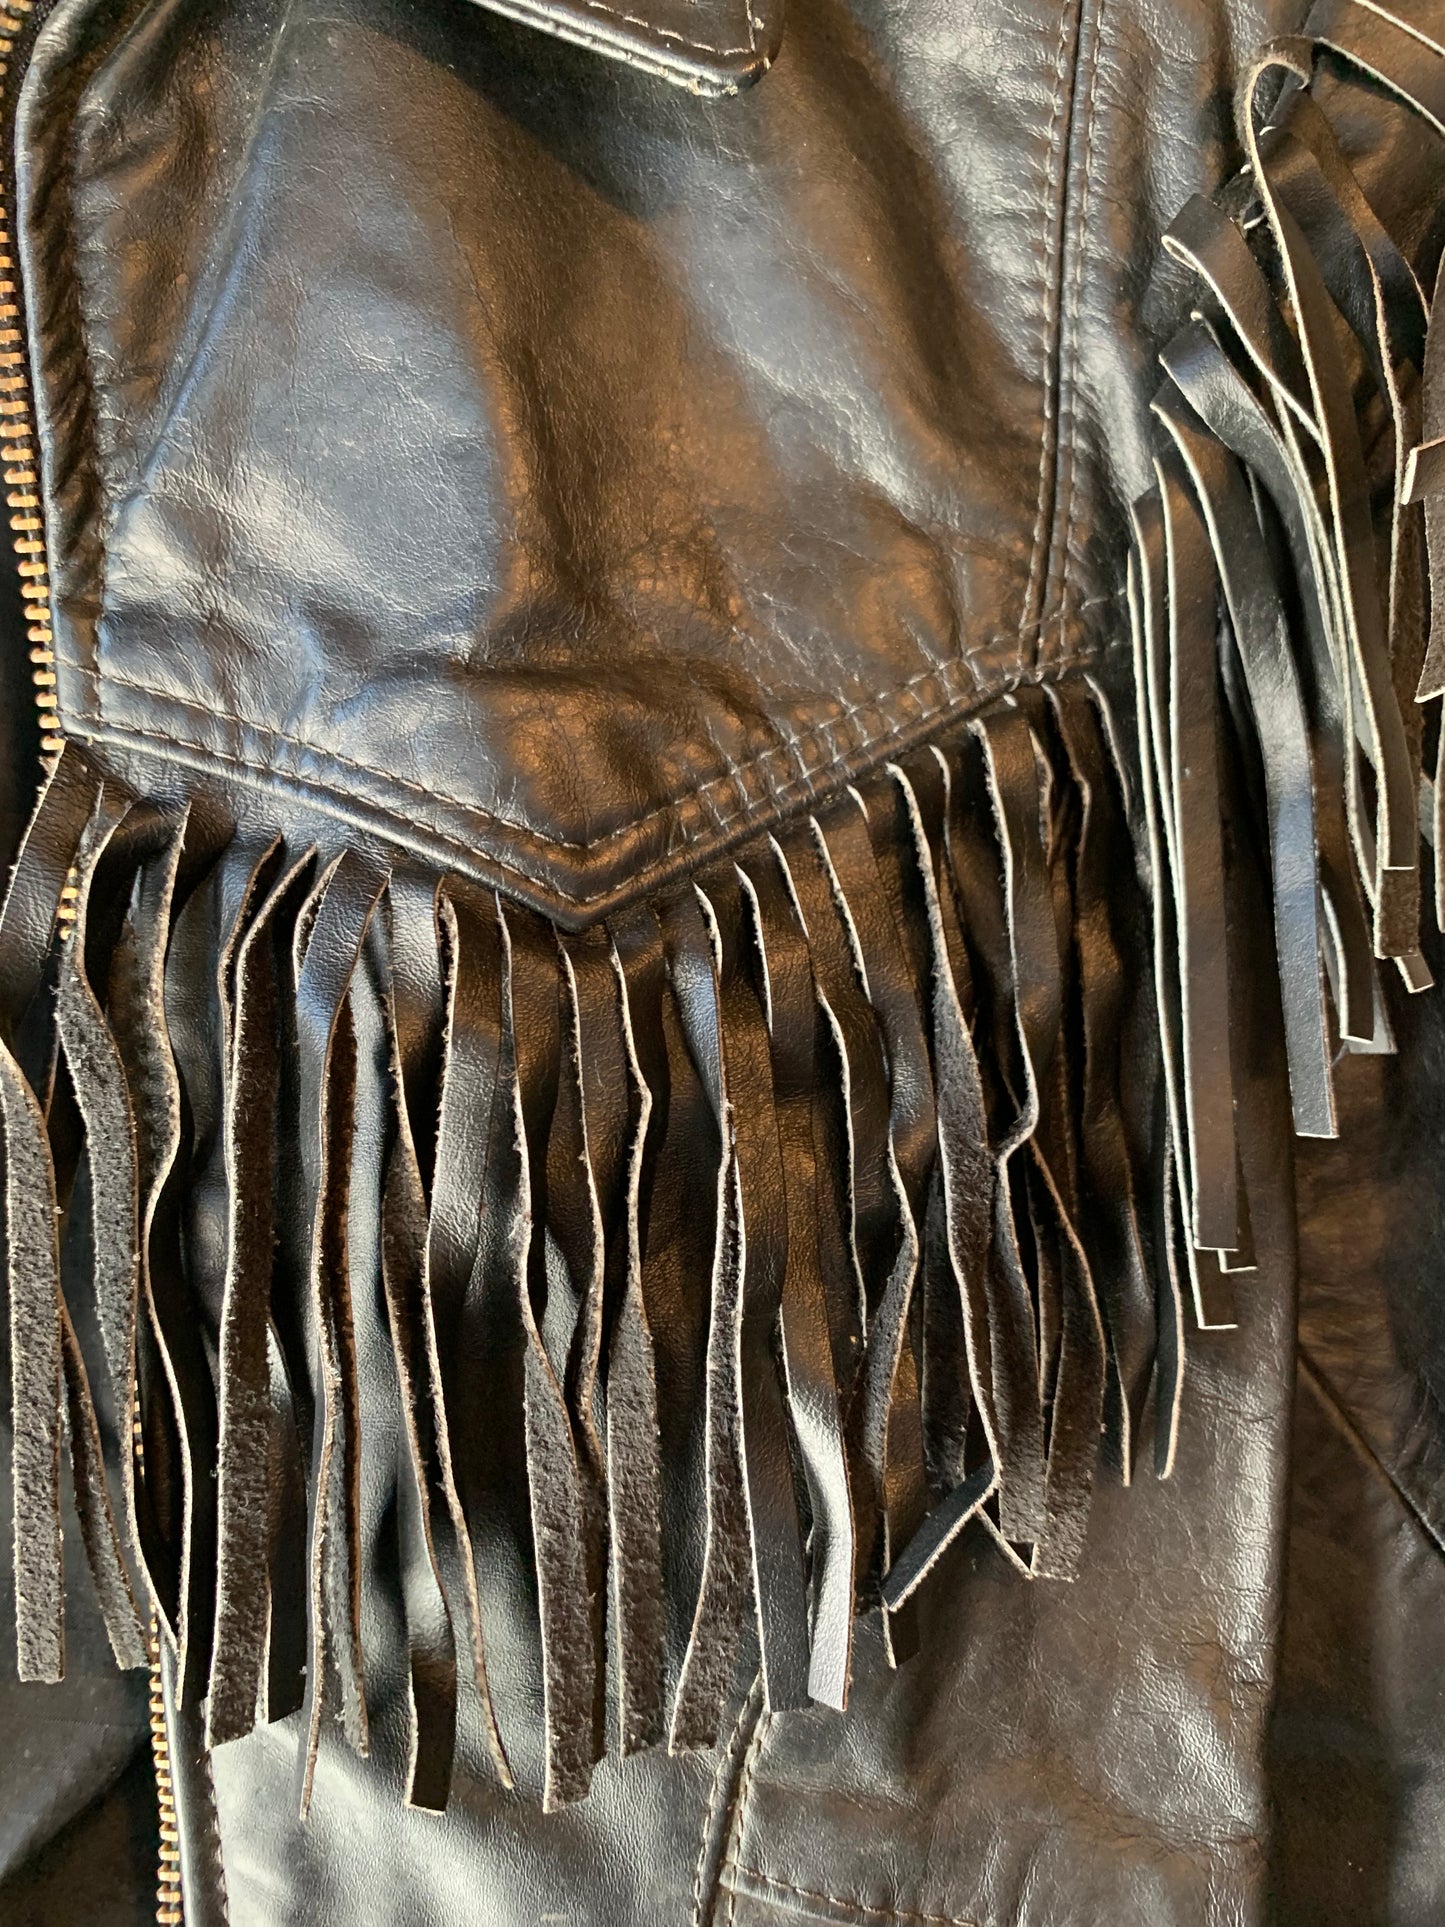 Branded Garments Zip Up 90s Leather Fringe Jacket (XS/S)